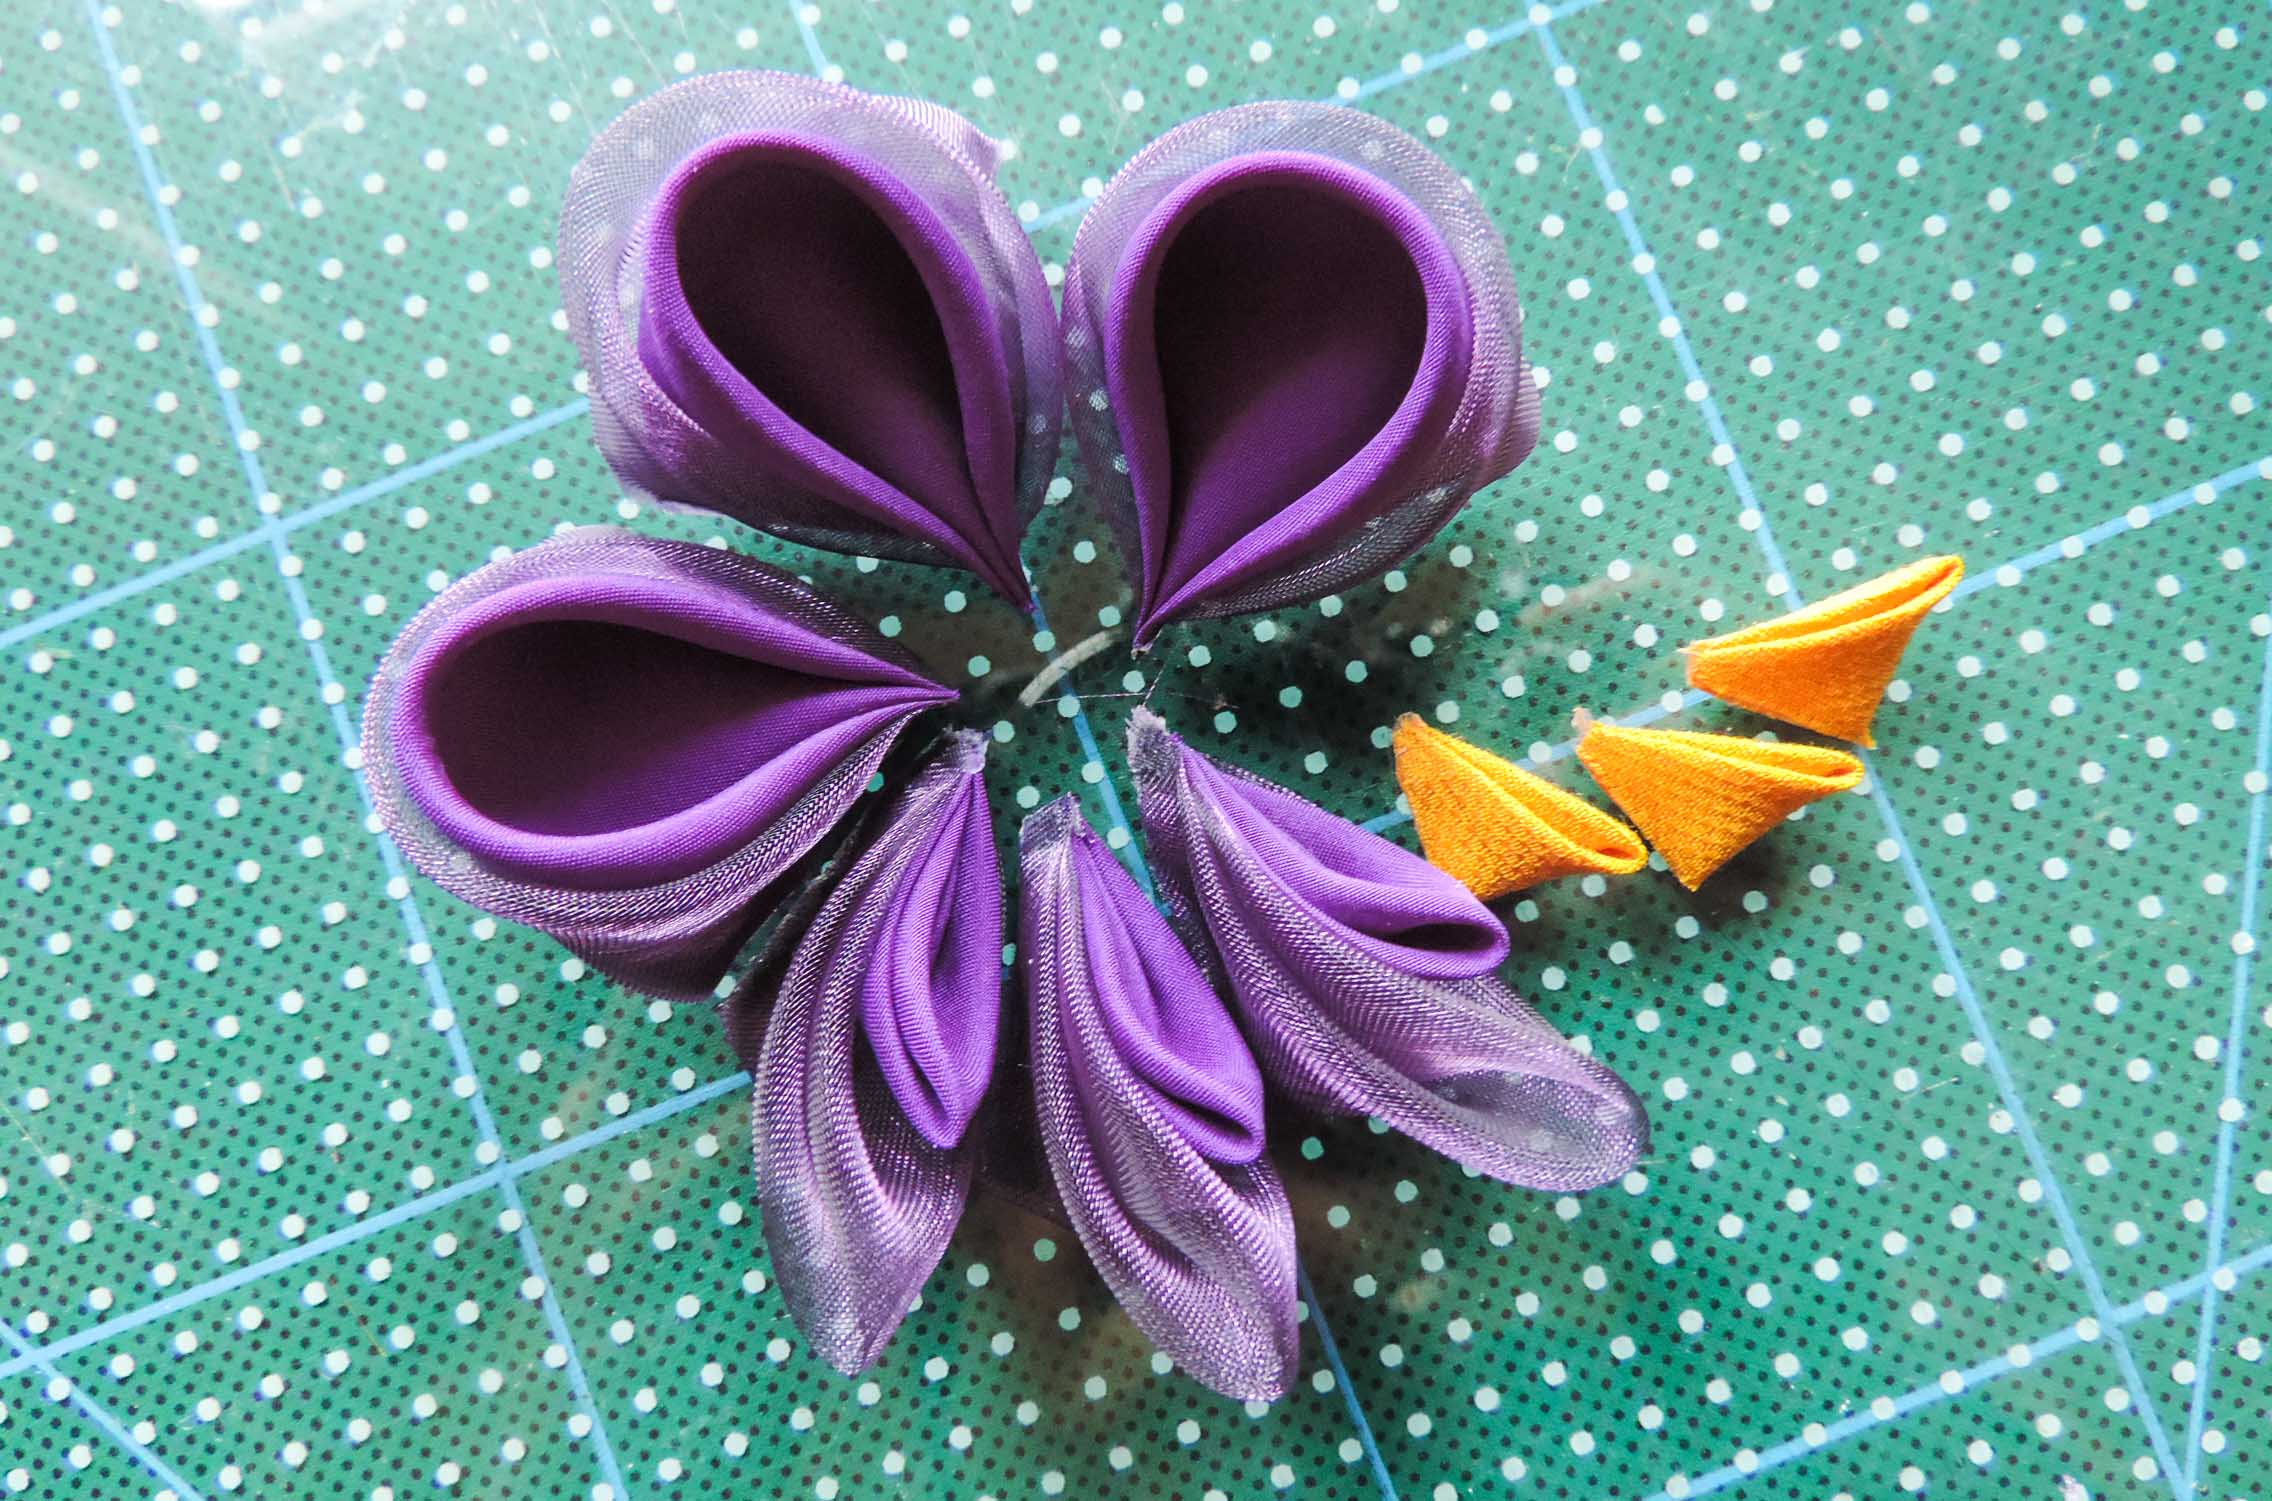 Iris flower tutorial - making the yellow petals 3